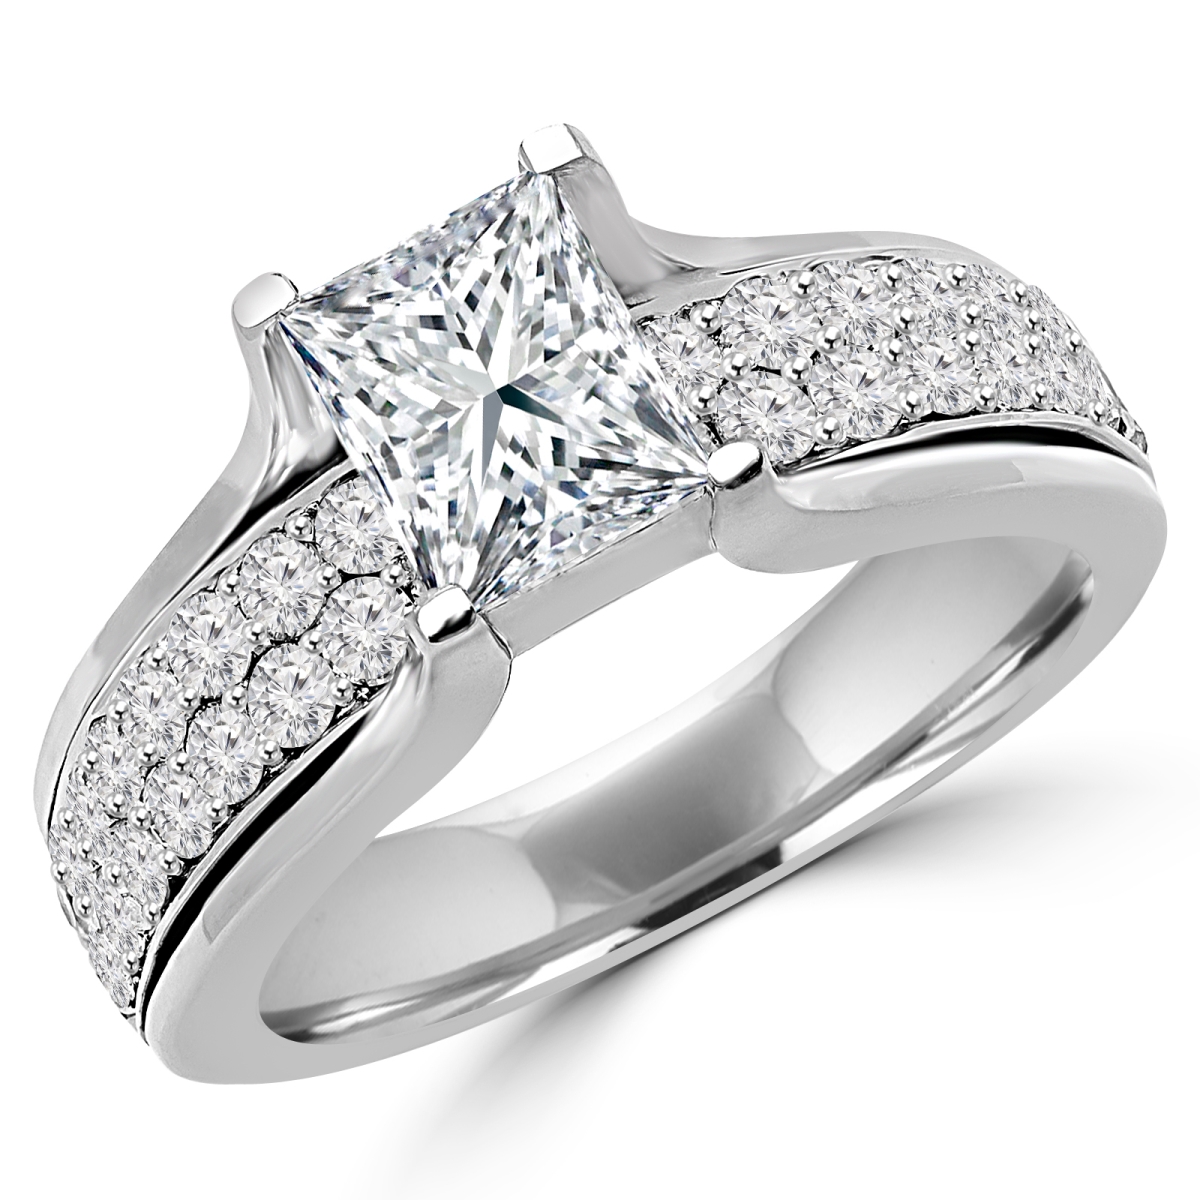 MD160117-3.25 2.1 CTW High Set Princess Cut Pave Diamond Engagement Ring in 14K White Gold, Size 3.25 -  Majesty Diamonds